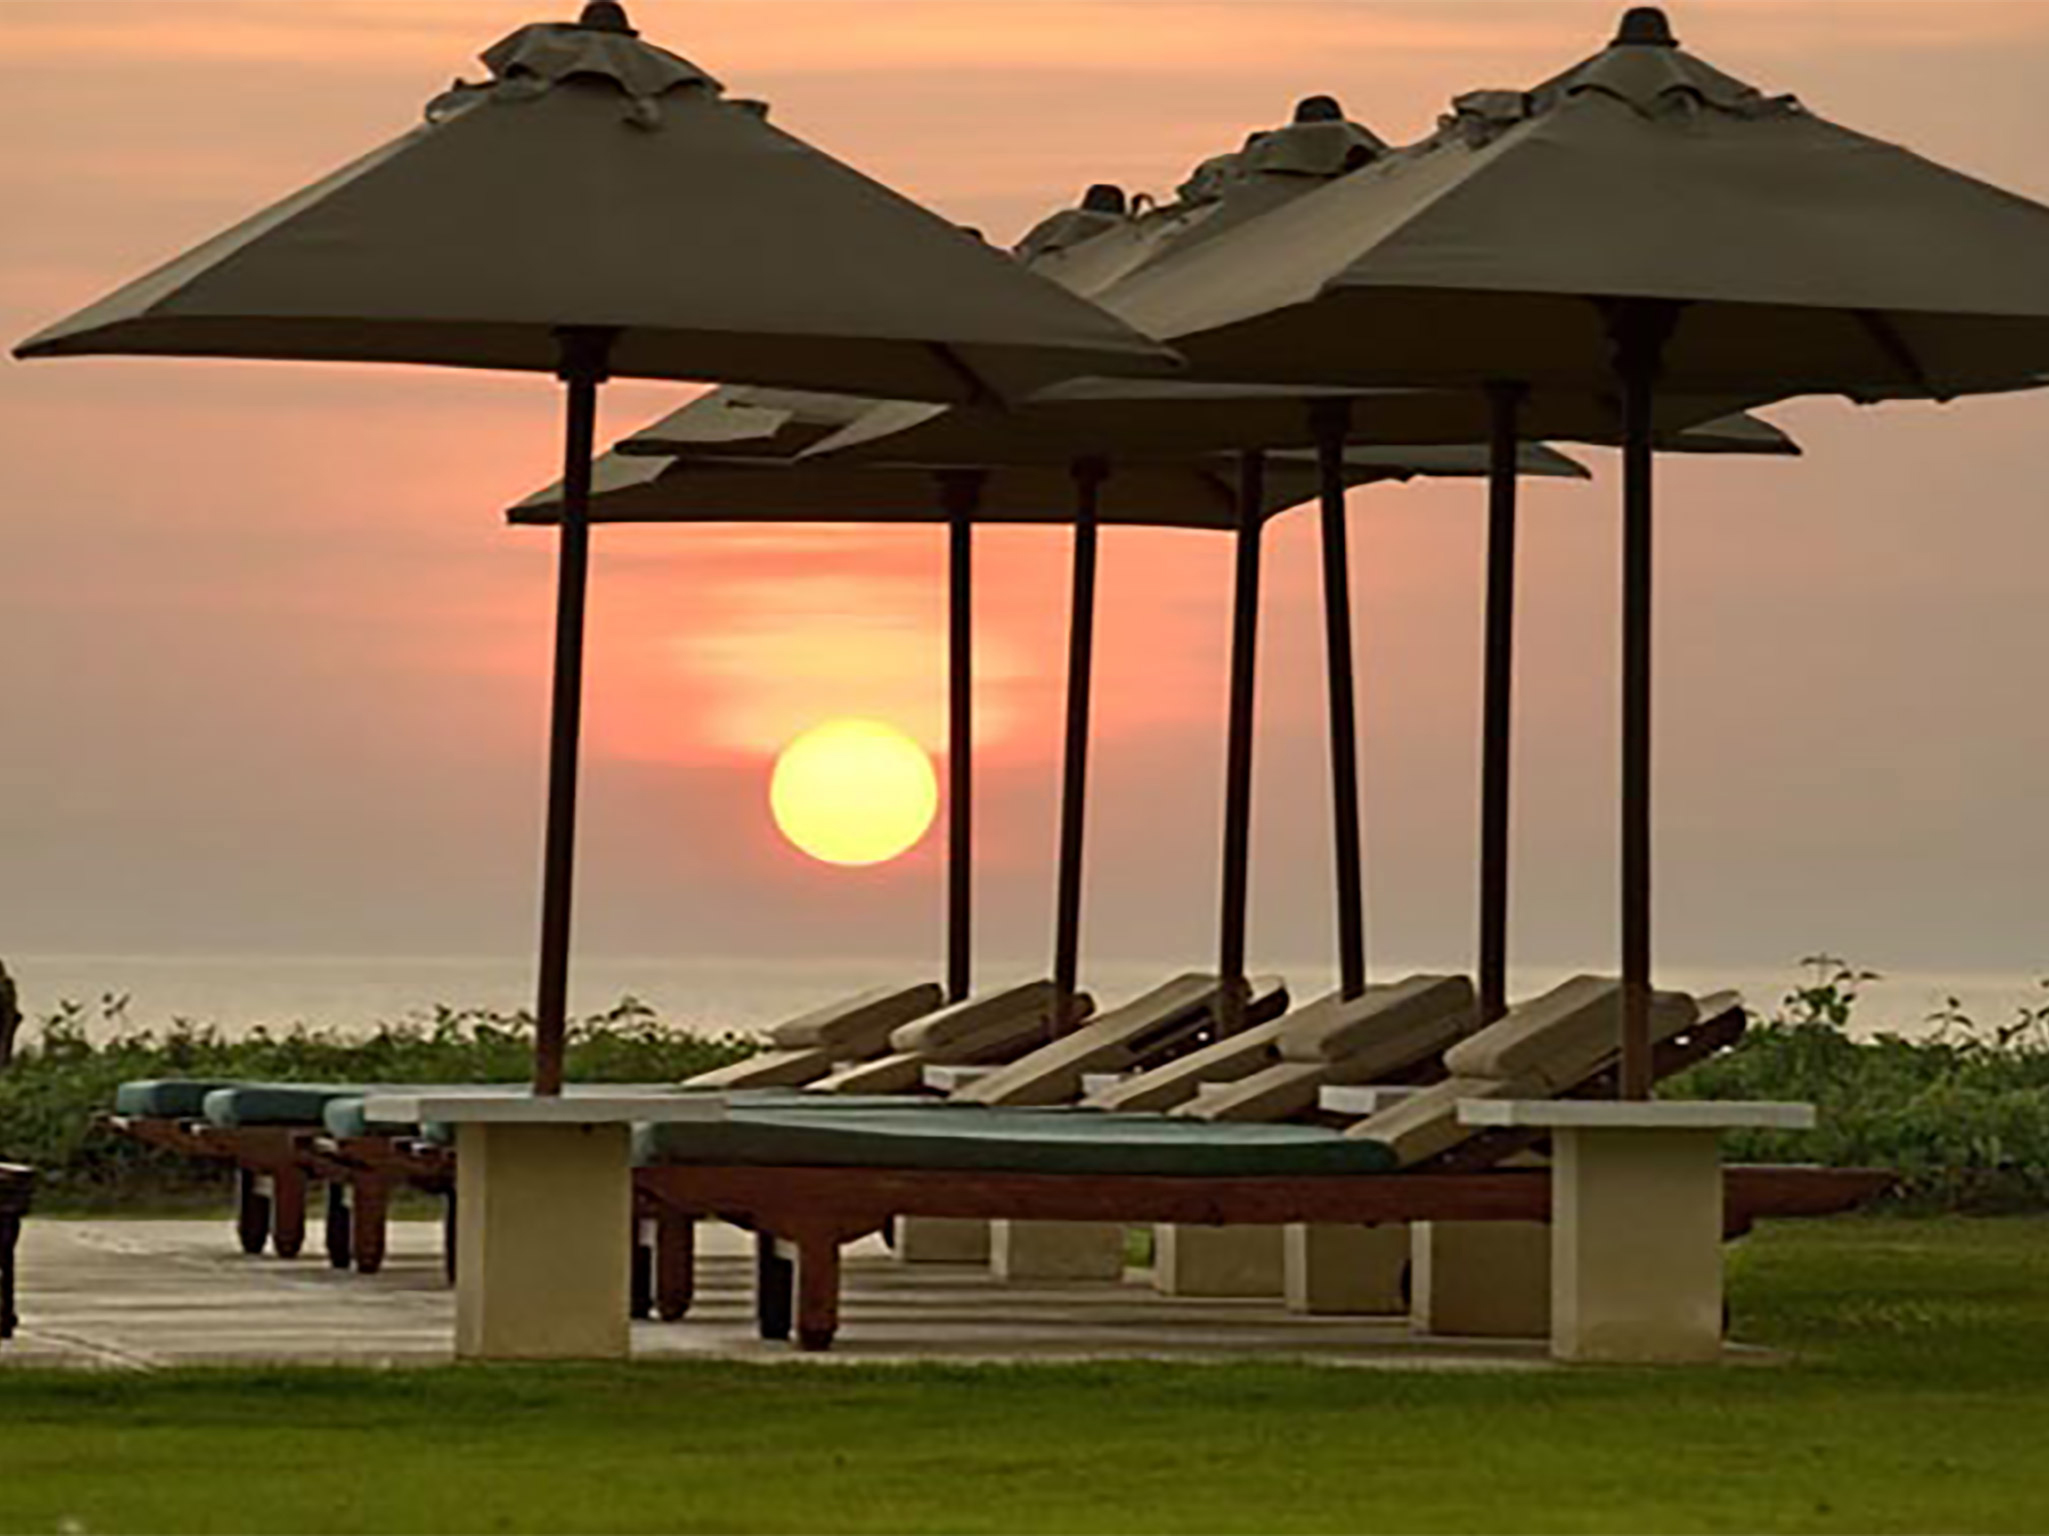 Atas Ombak -  Sunset and umbrellas - Villa Atas Ombak, Seminyak, Bali